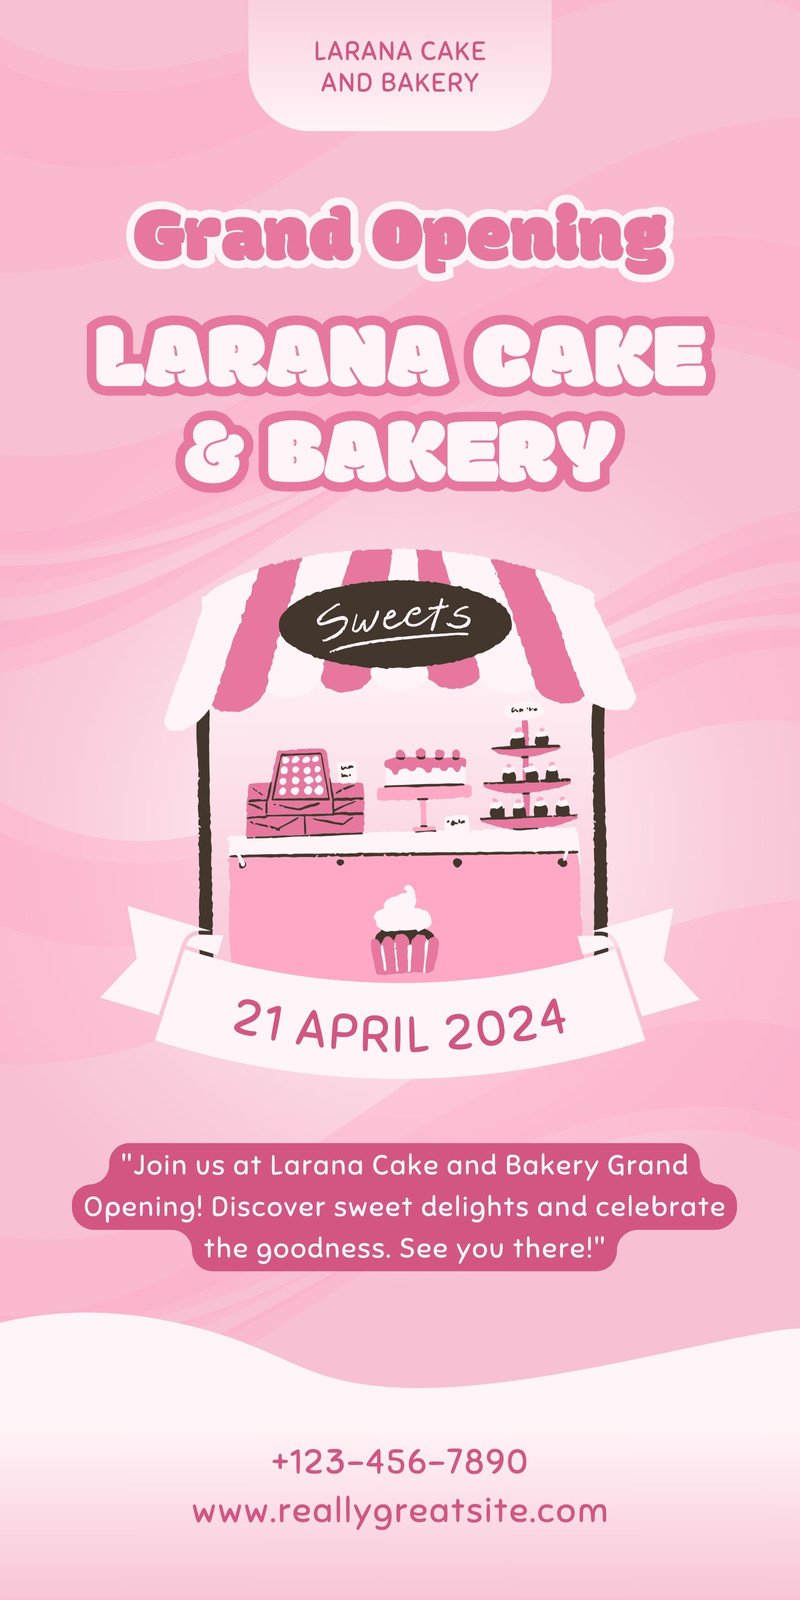 MAKE VALANTINE DAY SPECIAL CAKE SHOP BANNER DESIGN IN PIXELLAB | FREE .PLP  | CAKE SHOP BANNER - YouTube